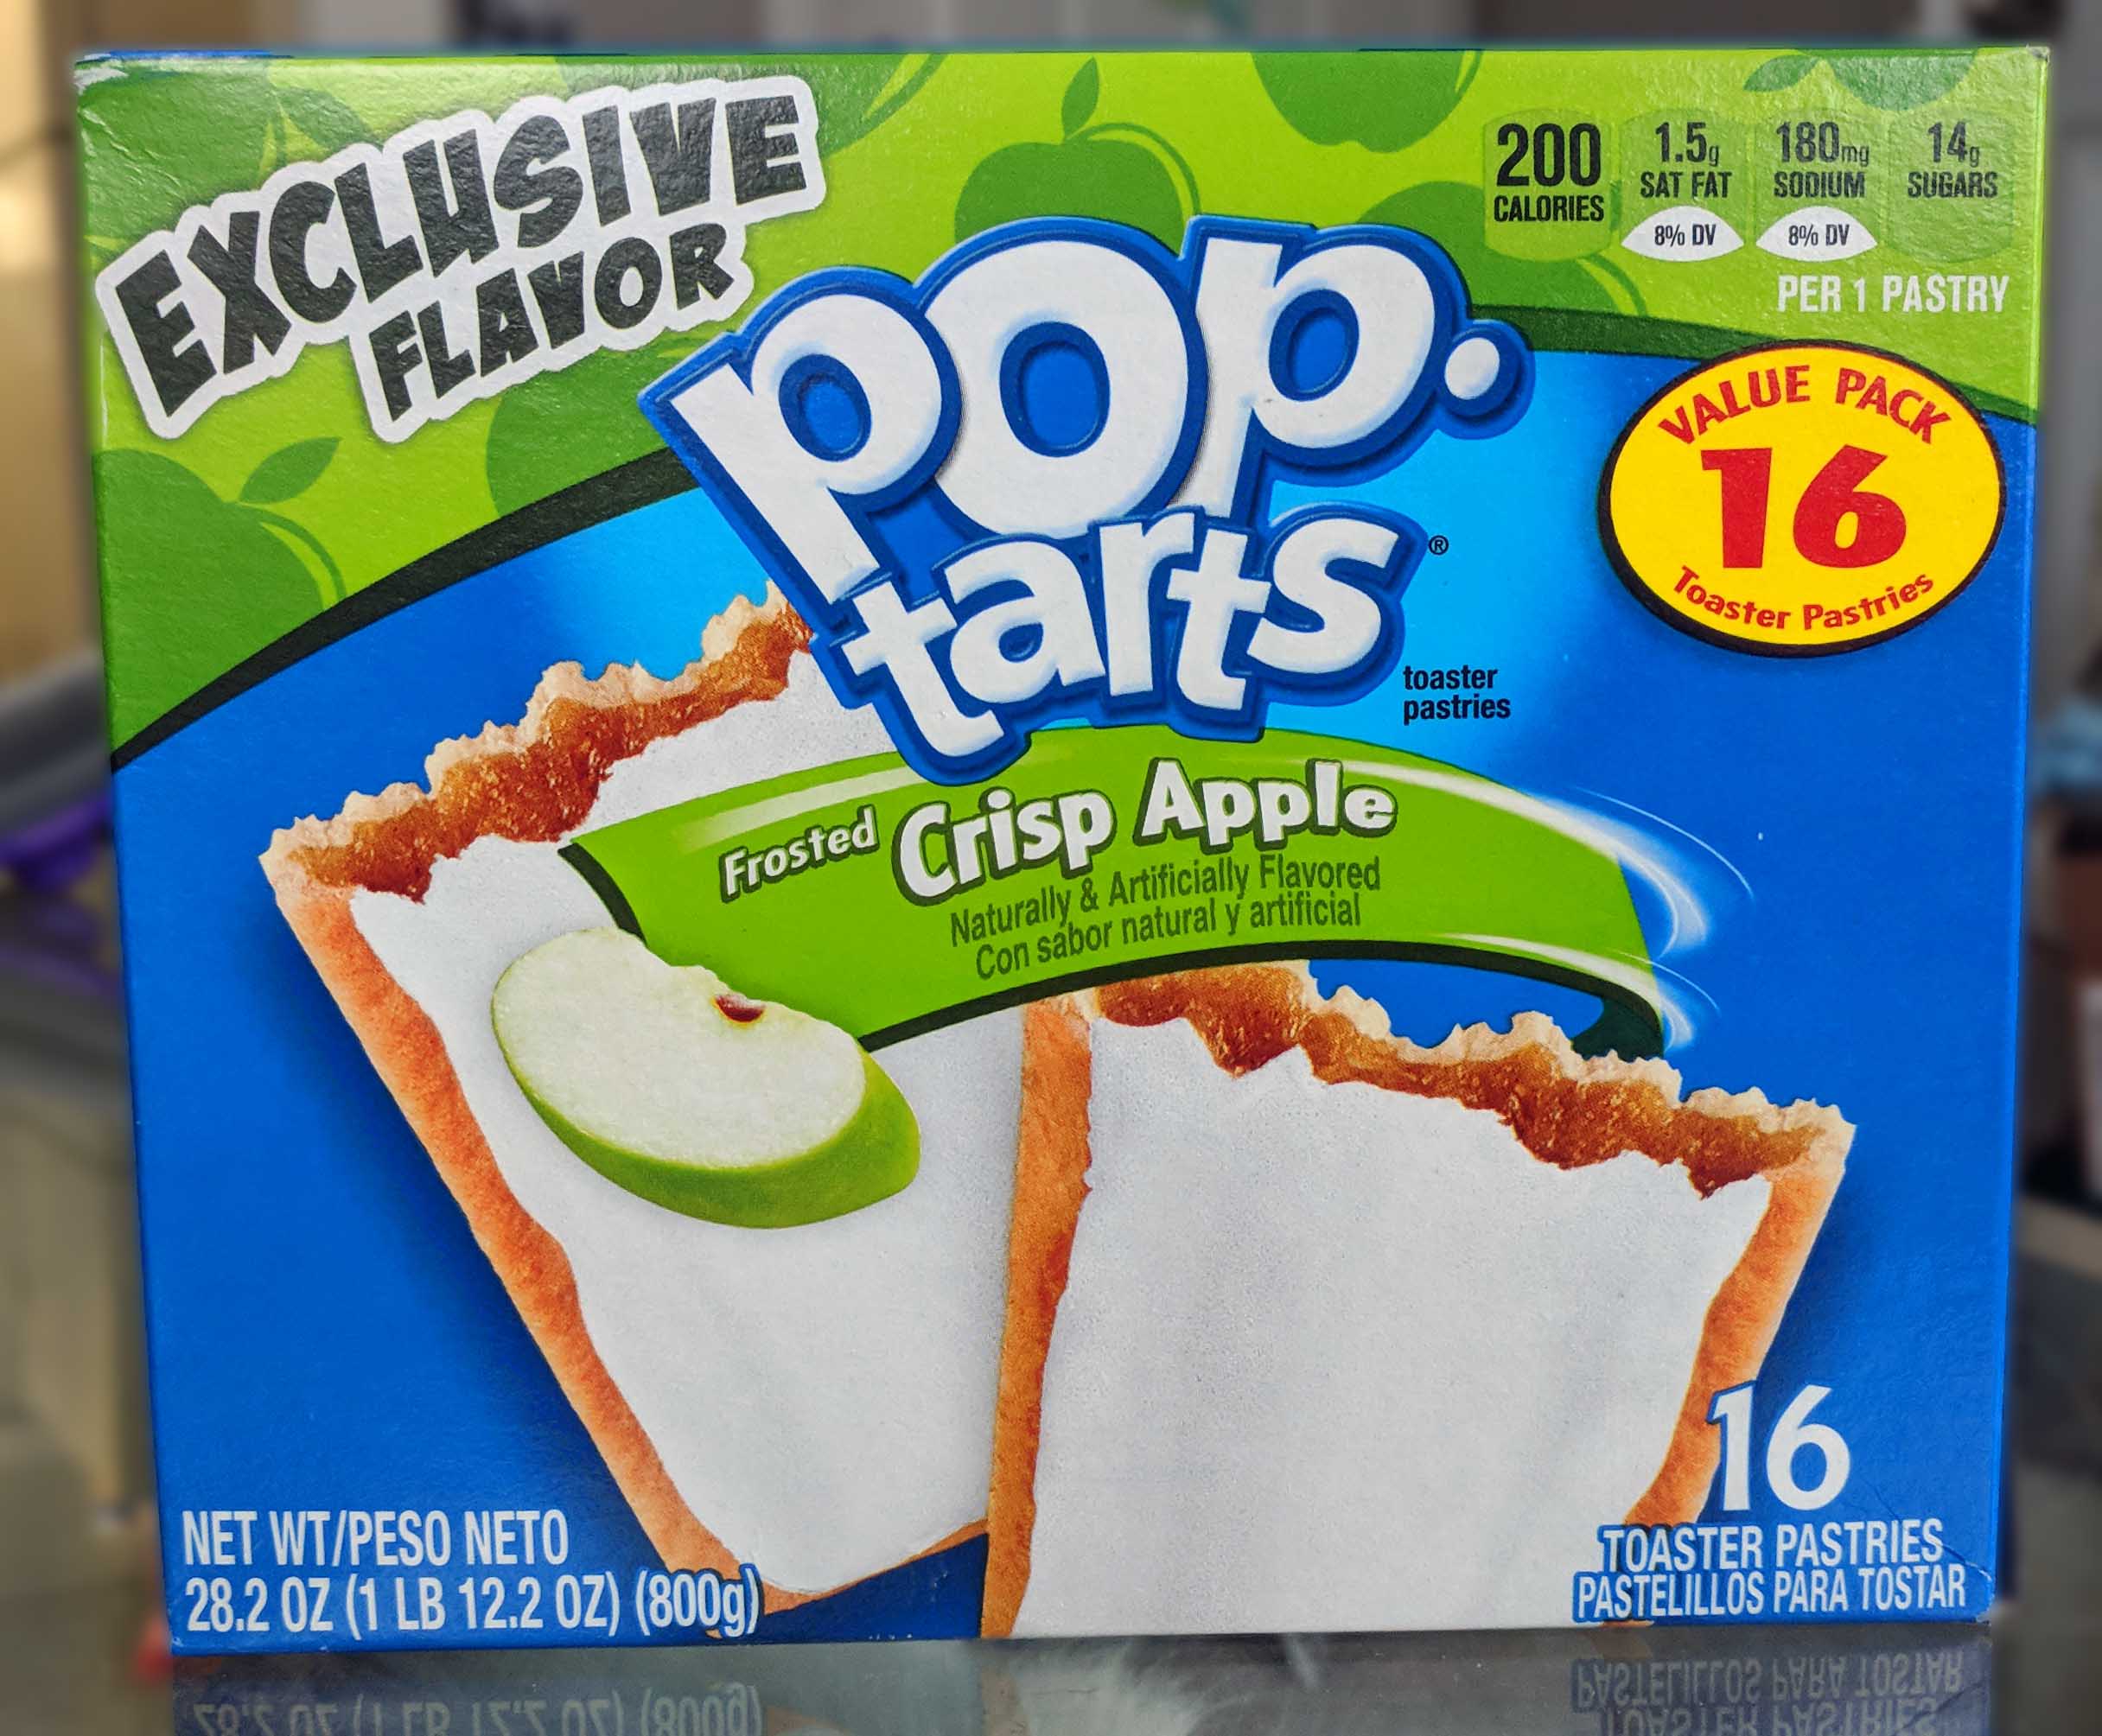 verdieping Aangepaste Fantasie Review: Frosted Crisp Apple Pop-Tarts - Cerealously